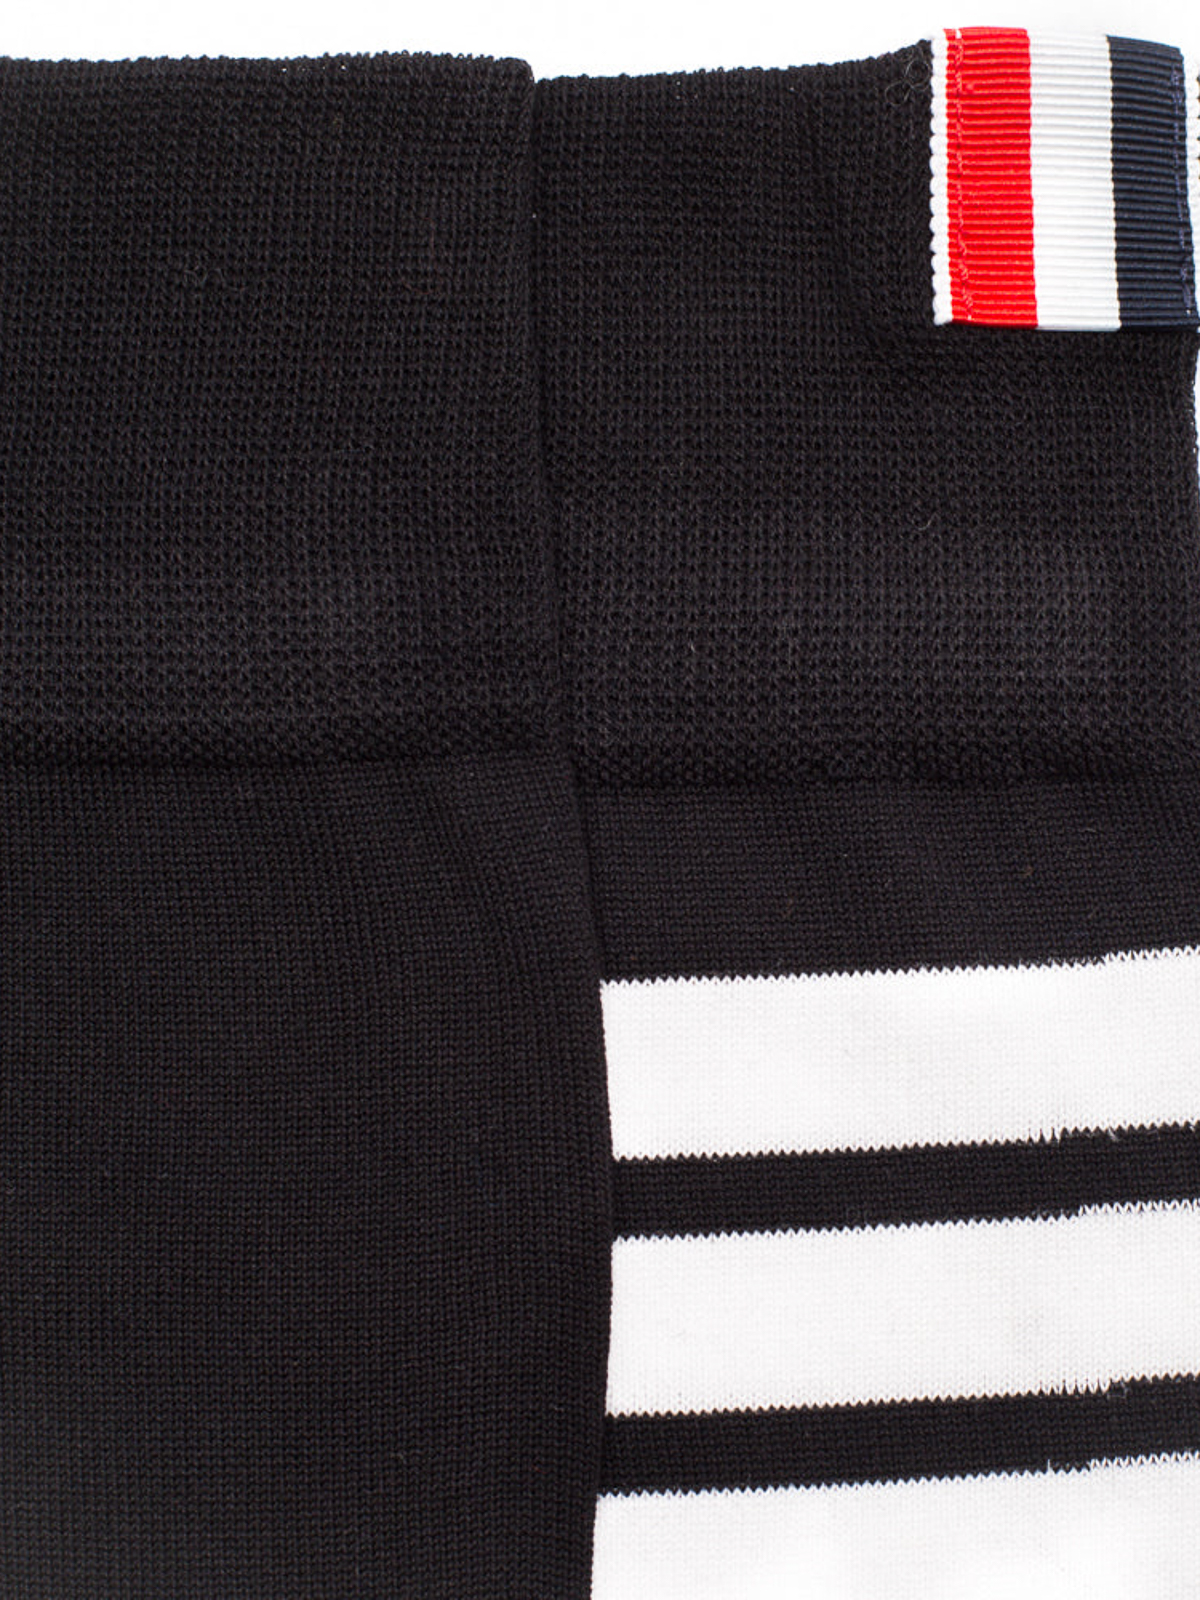 Shop Thom Browne Black Cotton Socks With Four Stripes